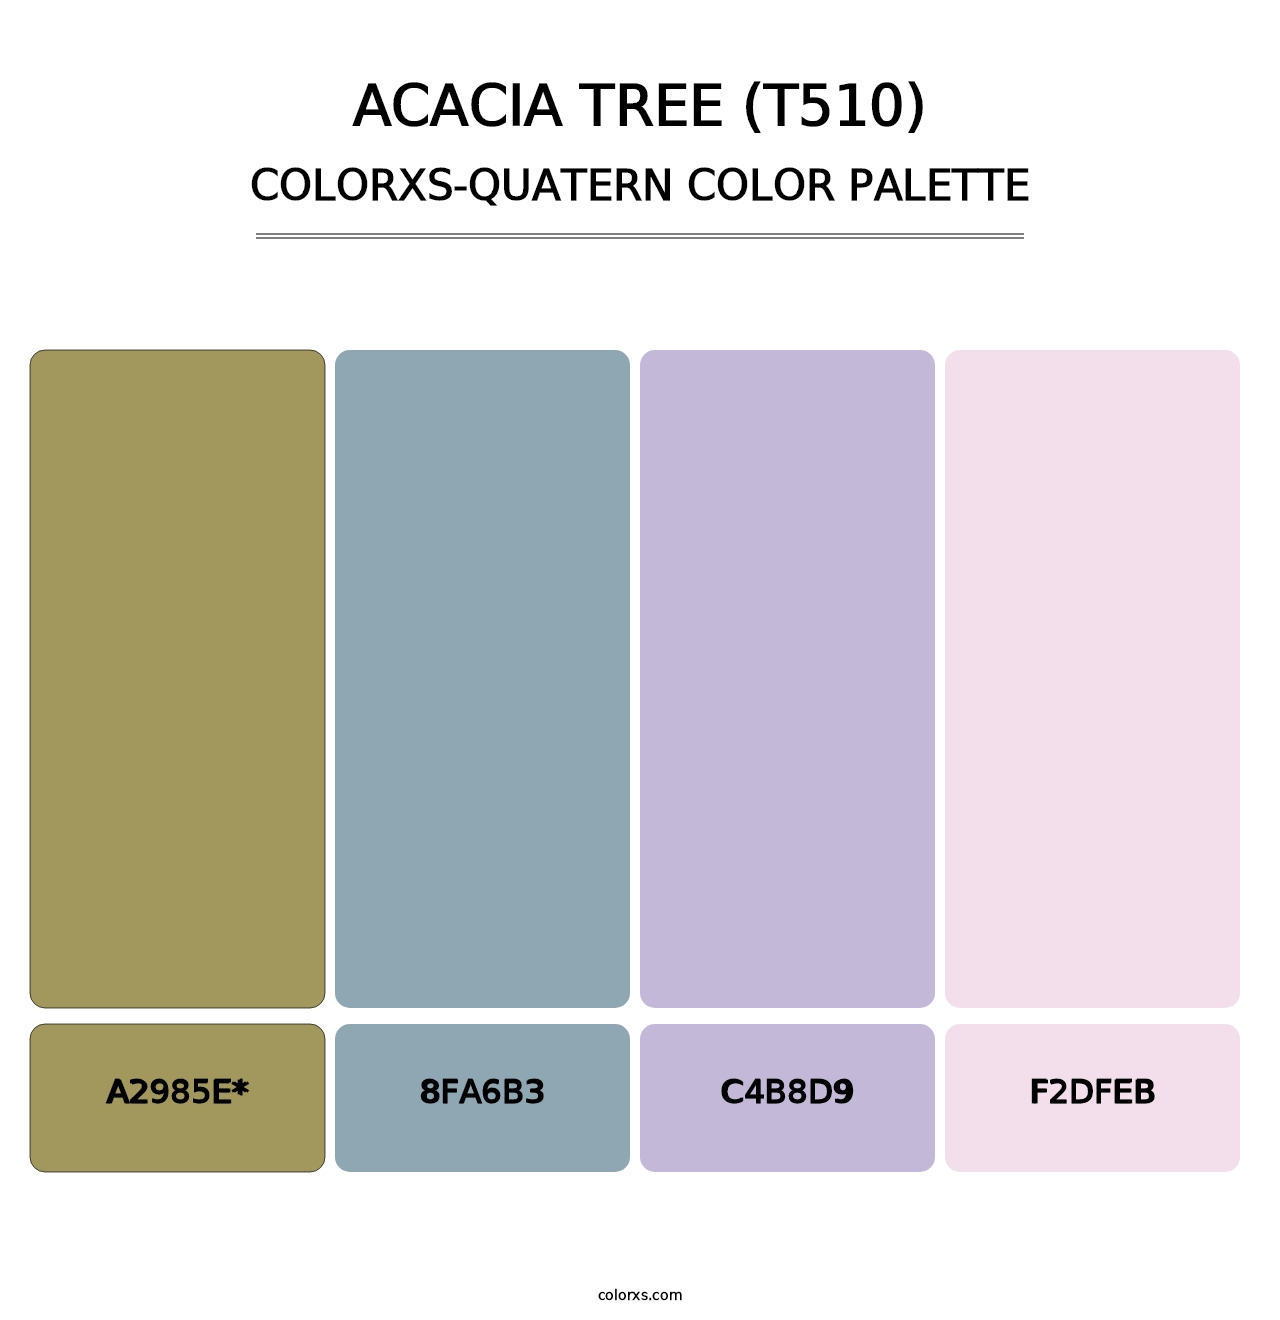 Acacia Tree (T510) - Colorxs Quad Palette